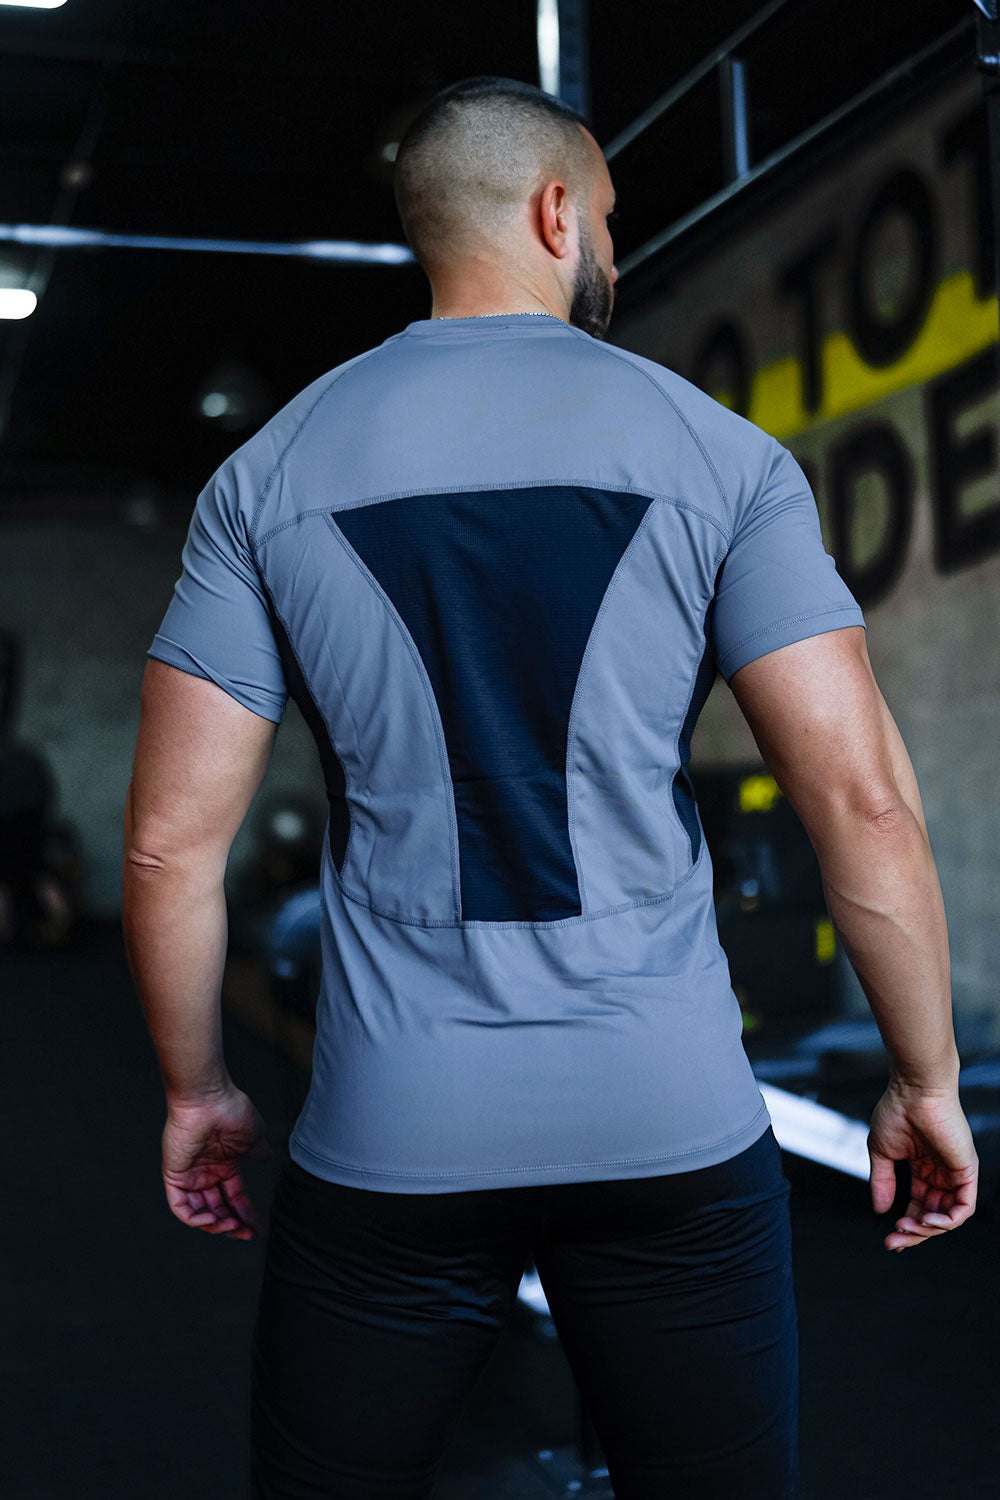 JARKADA Mens Athletic Shirts Short Sleeve Compression T Shirts for Men-BLUE